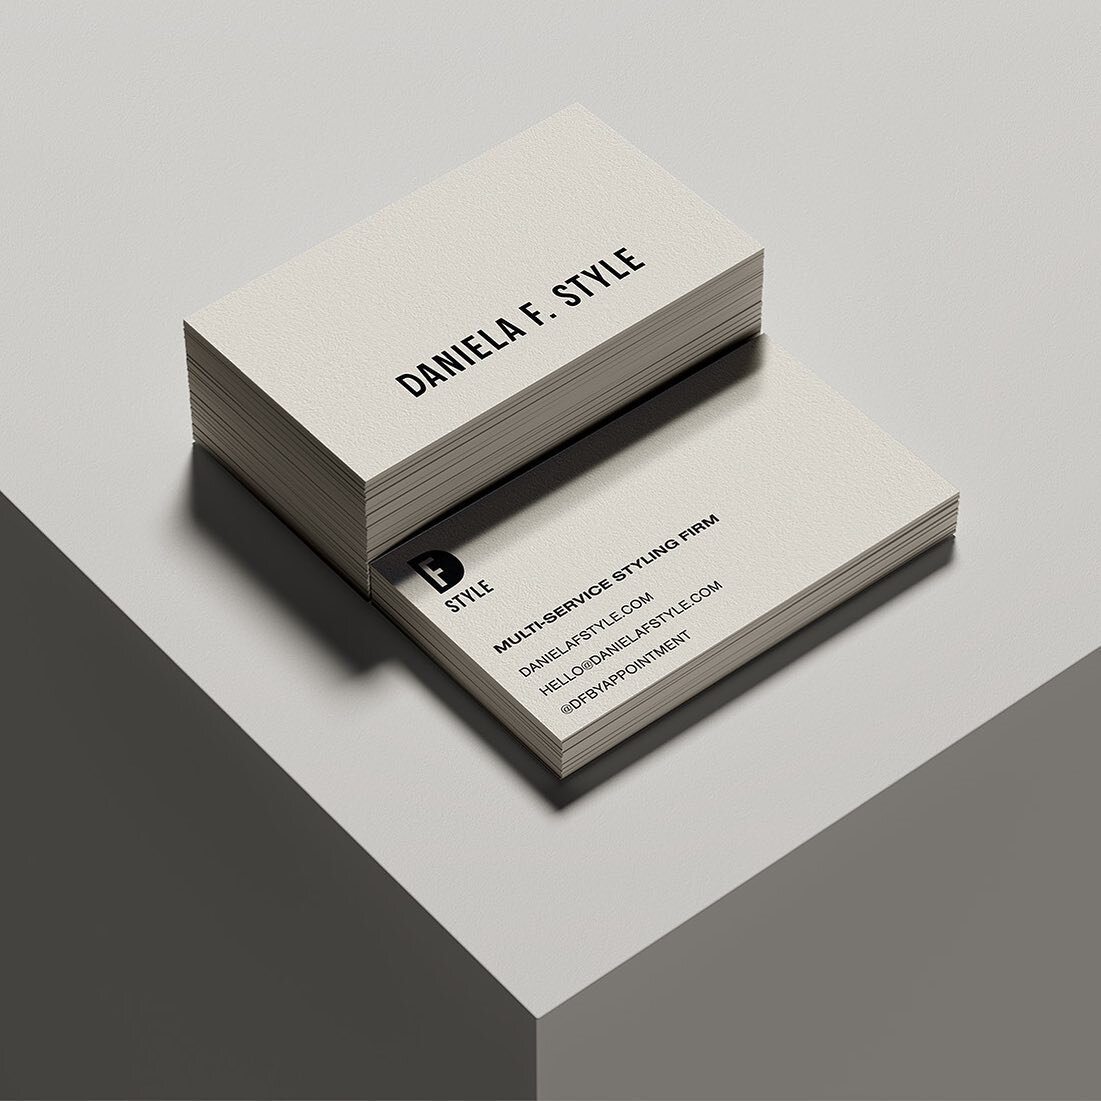 Business card design for @dfbyappointment
Custom wordmark logo, paired with a classic sans-serif font: Nimbus.

⁣
⁣
⁣
⁣
⁣
⁣
&mdash;⁣
#businesscarddesign #visualidentitydesign #fashionstylist #fashionbrandingandcommunication #sansserif #minimallogodes